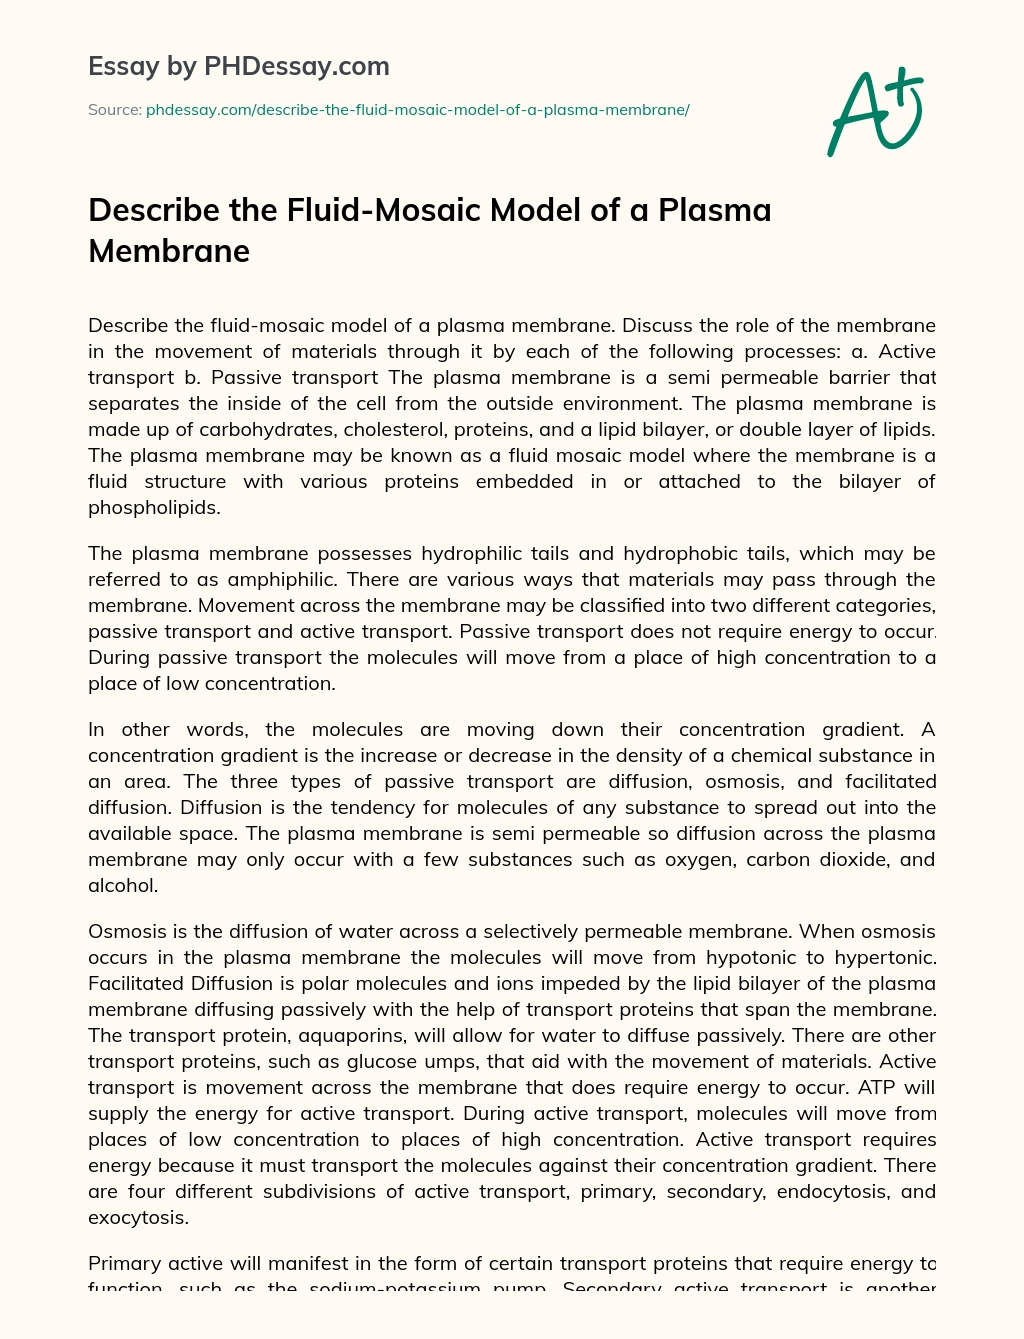 Describe the Fluid-Mosaic Model of a Plasma Membrane essay